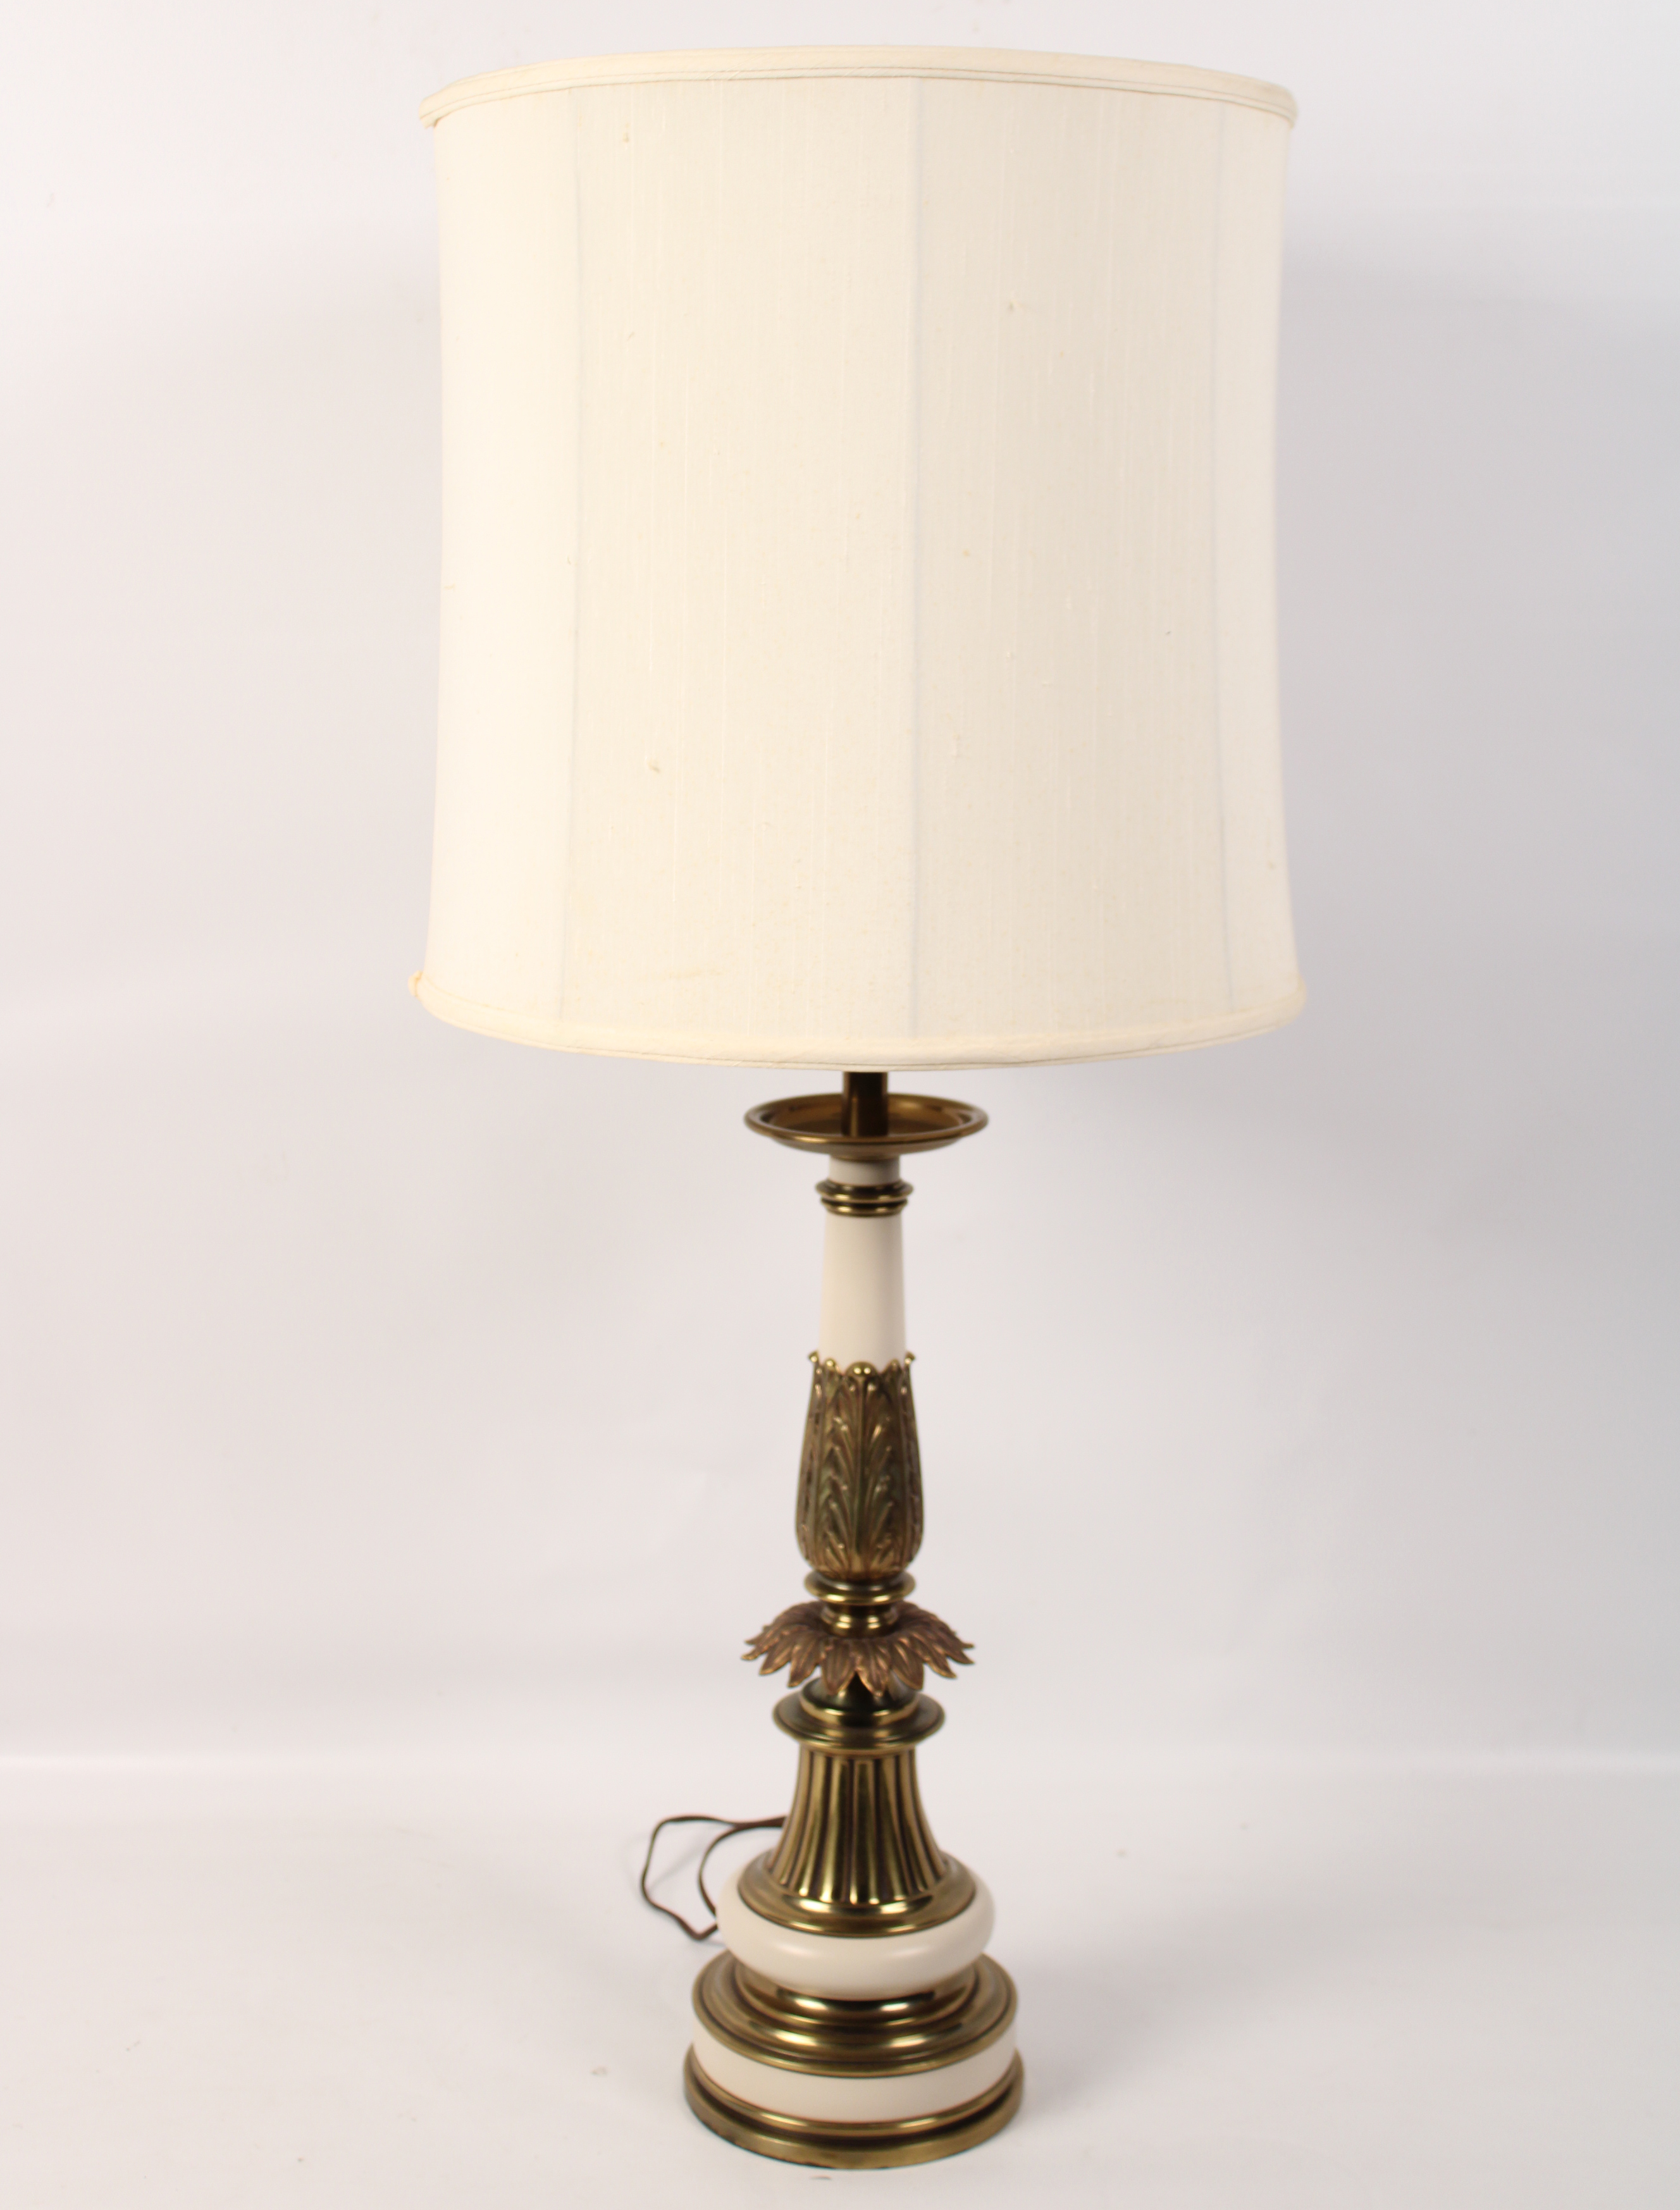 BRONZE AND CERAMIC TABLE LAMP BRONZE 35fcf4